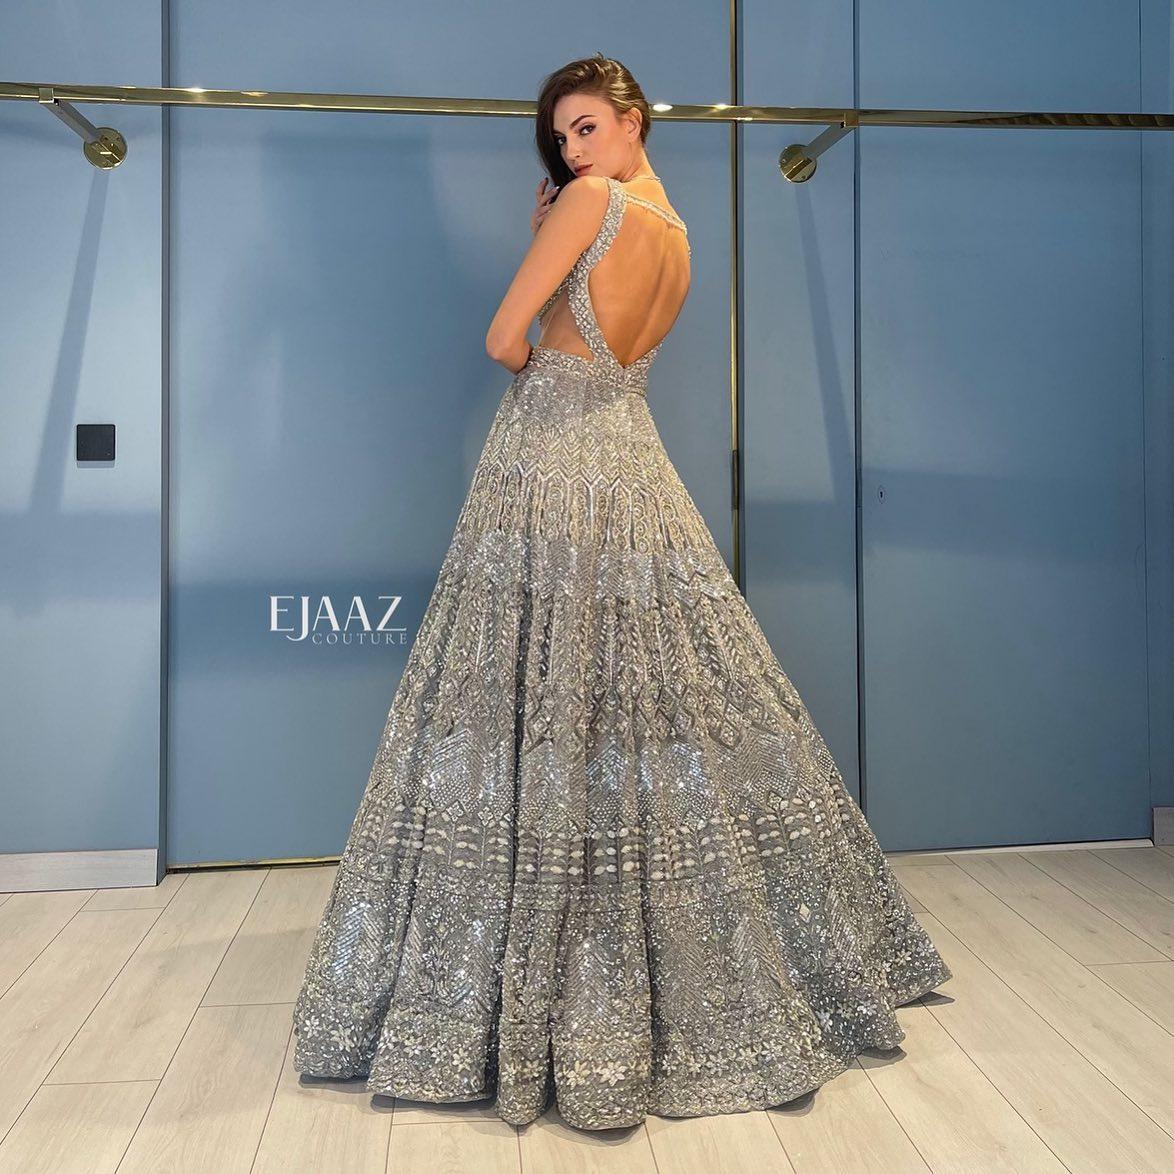 Short Sleeve High Neckline Sequin Lace Wedding Dress With High Slit |  Kleinfeld Bridal